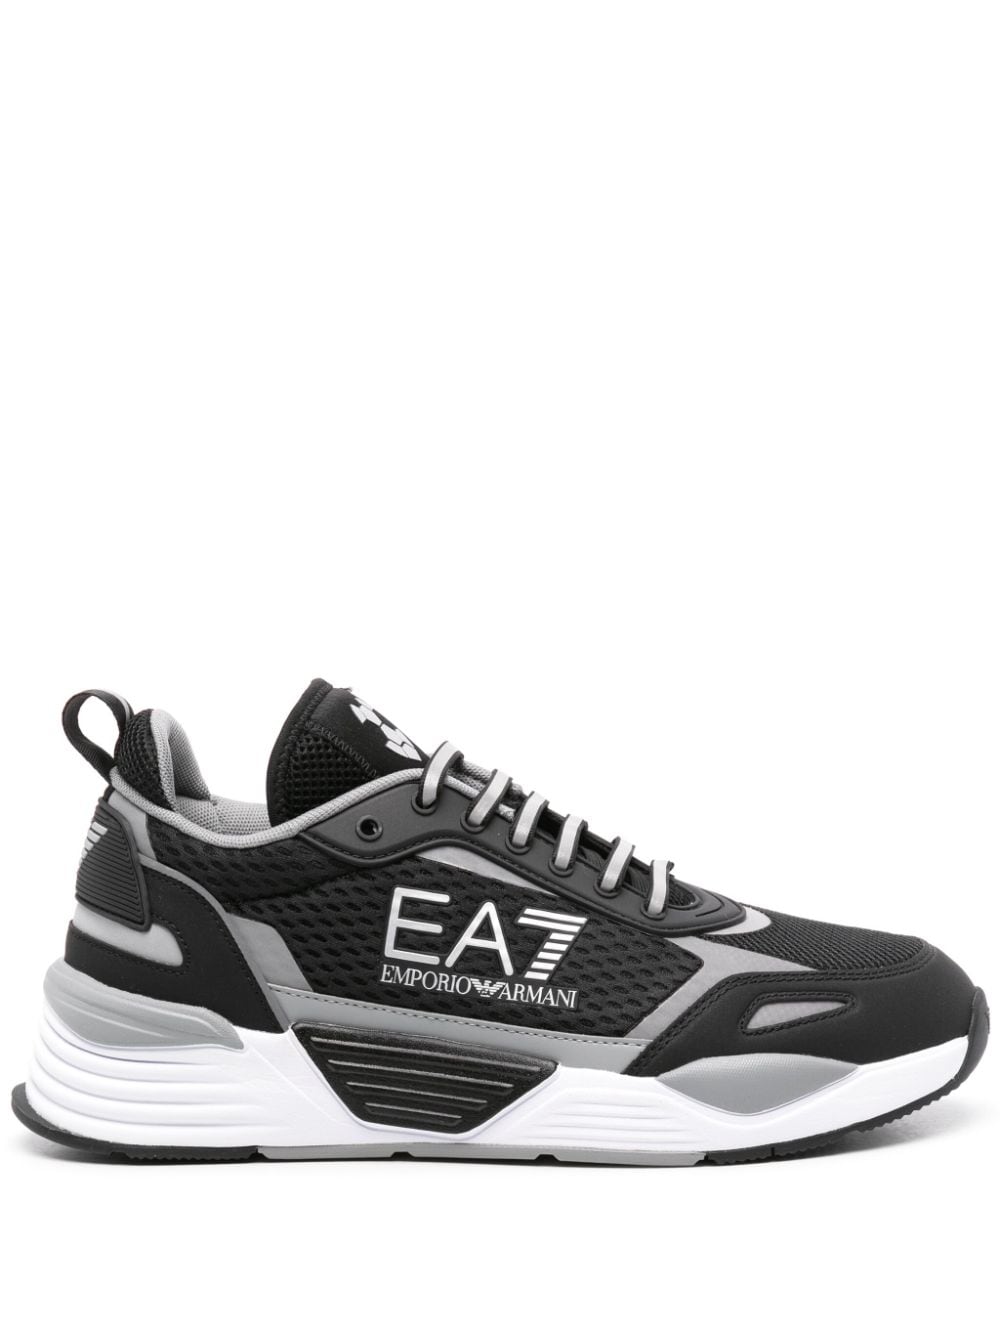 Ea7 Emporio Armani Ace Runner chunky sneakers Zwart